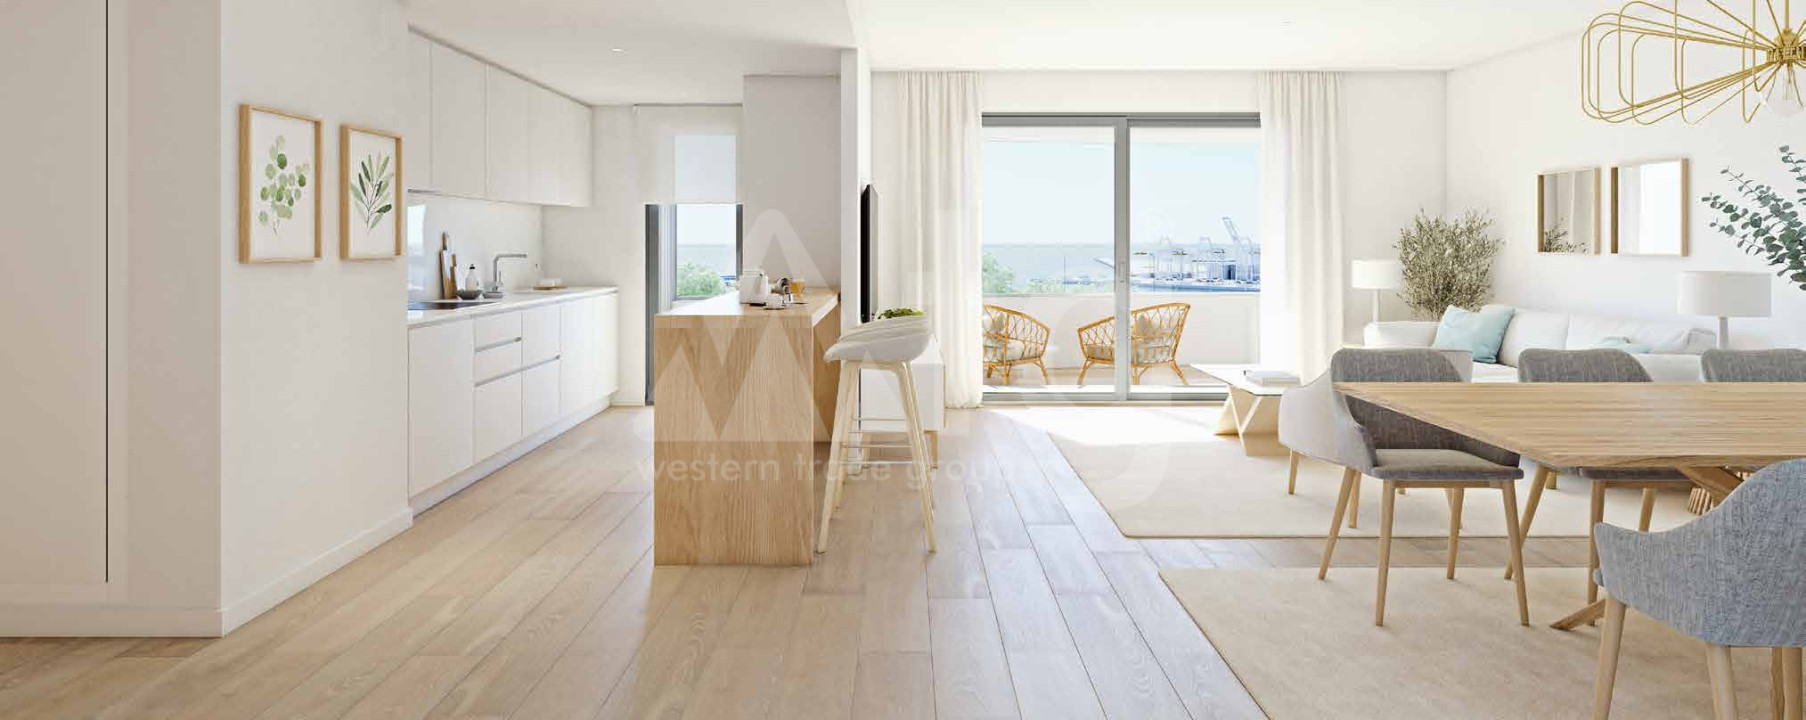 3 bedroom Apartment in Alicante - AEH25897 - 4